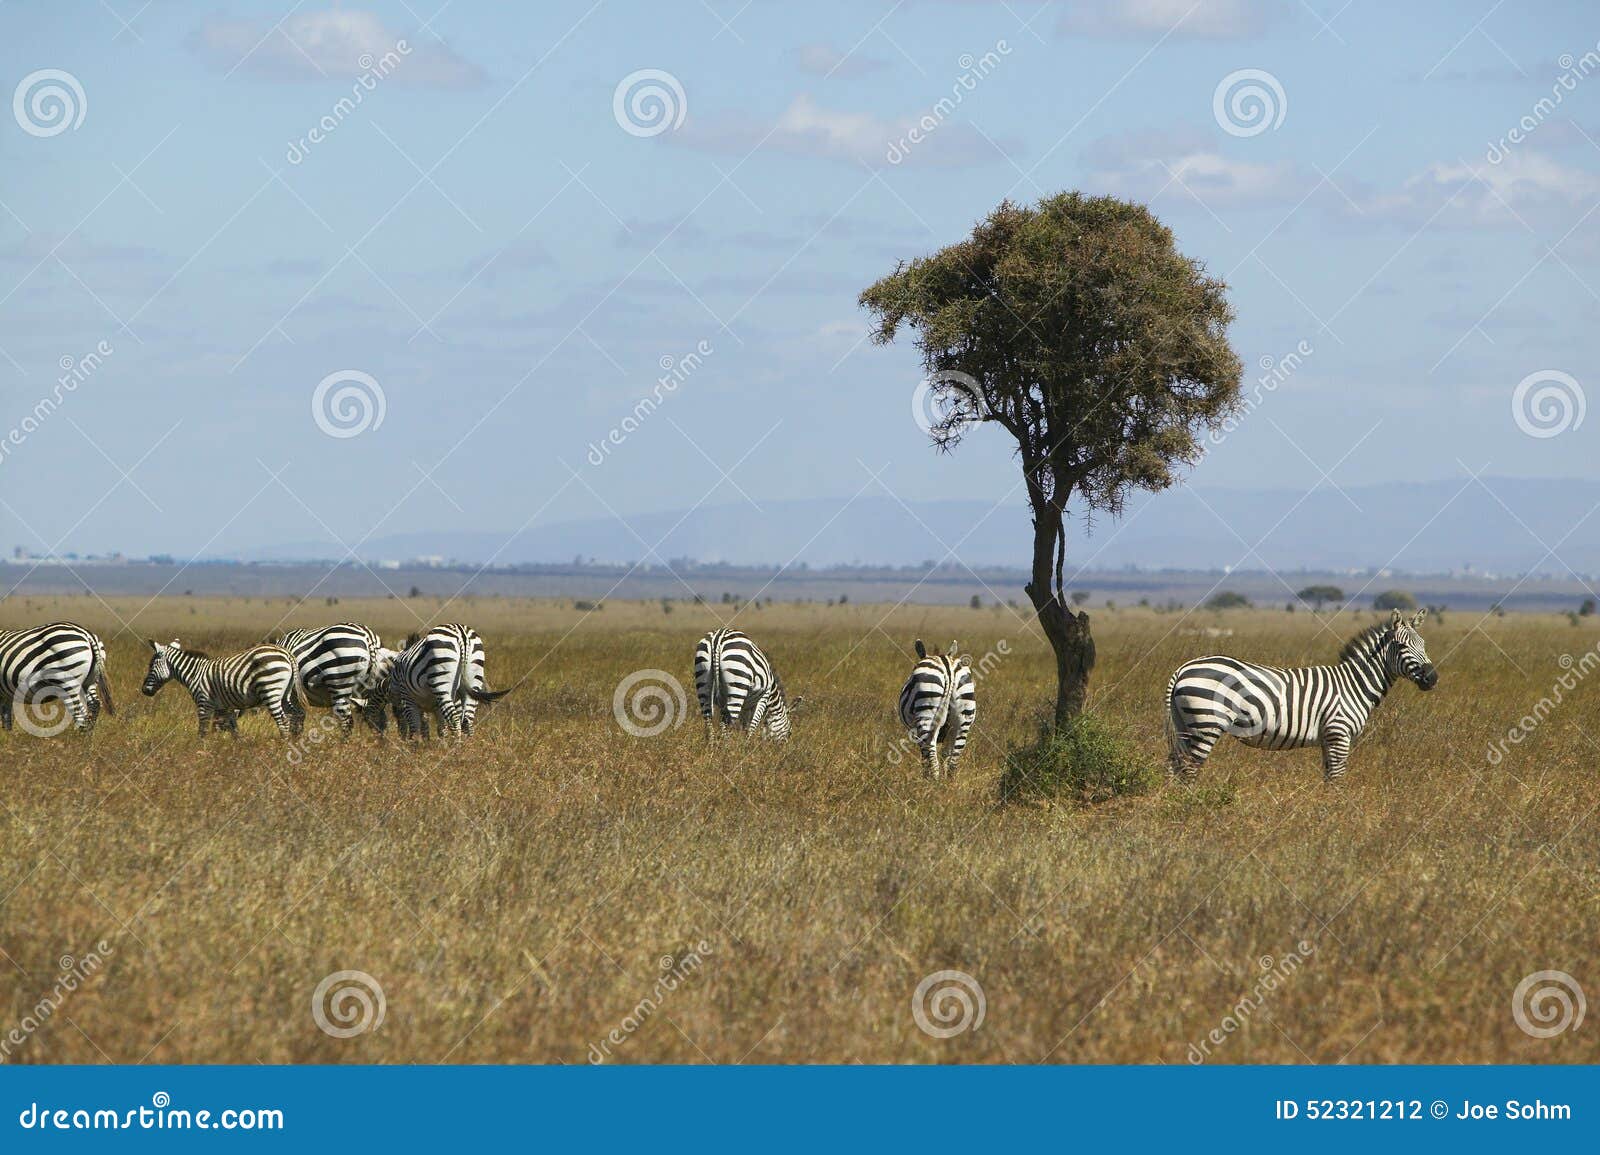 zebra and acacia tree in nairobi national park, nairobi, kenya, africa